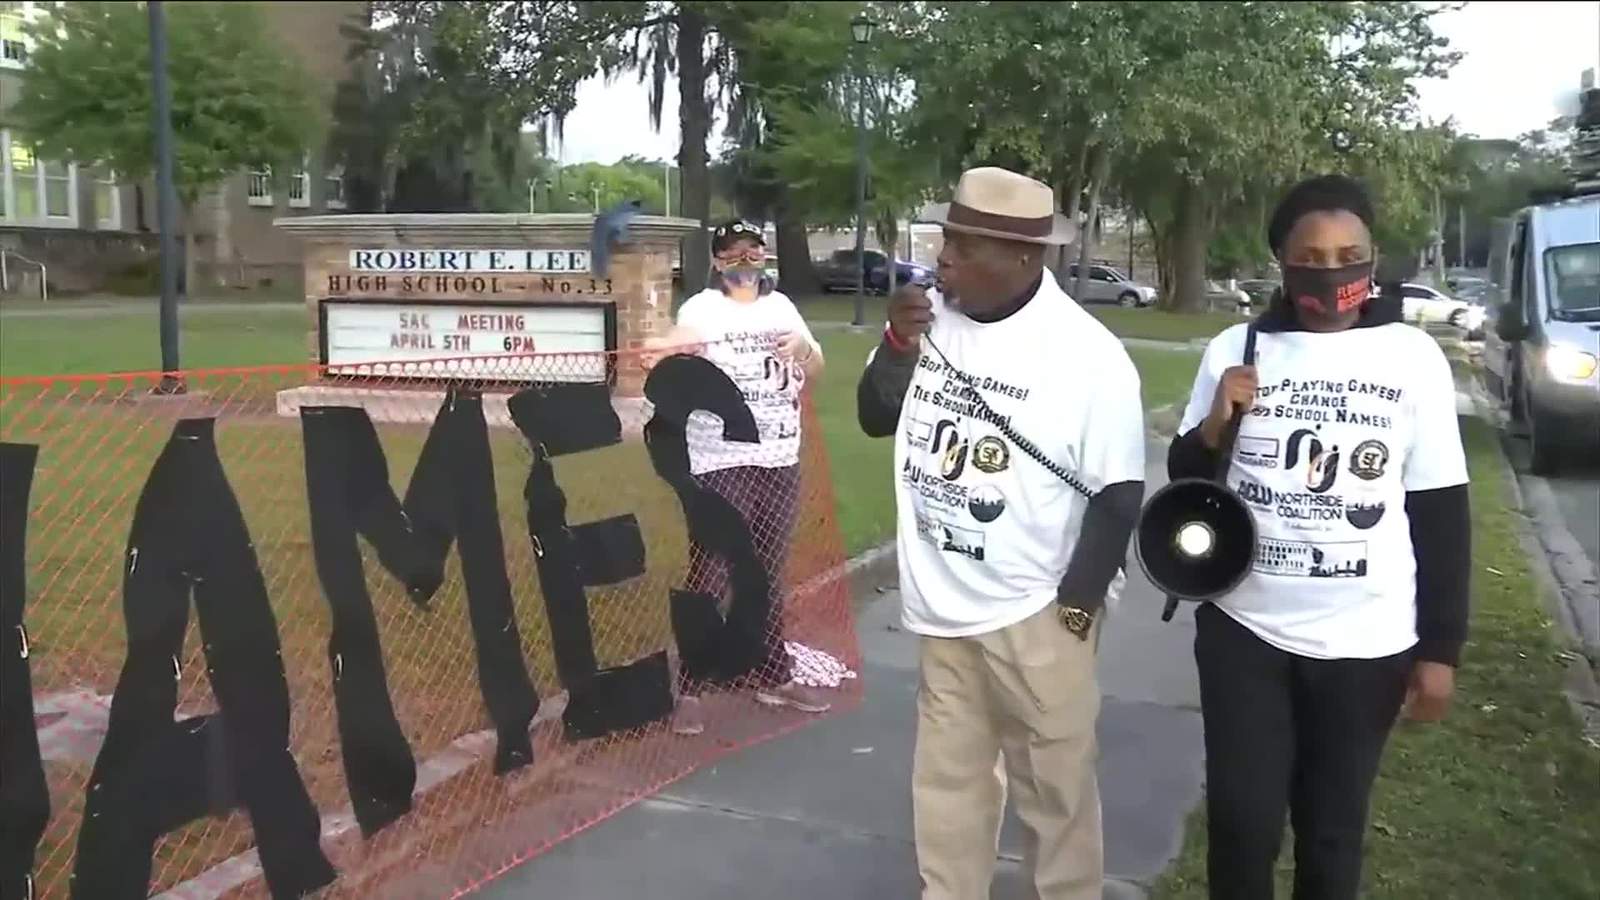 Demonstrators show up at Lee High School after name change proposals